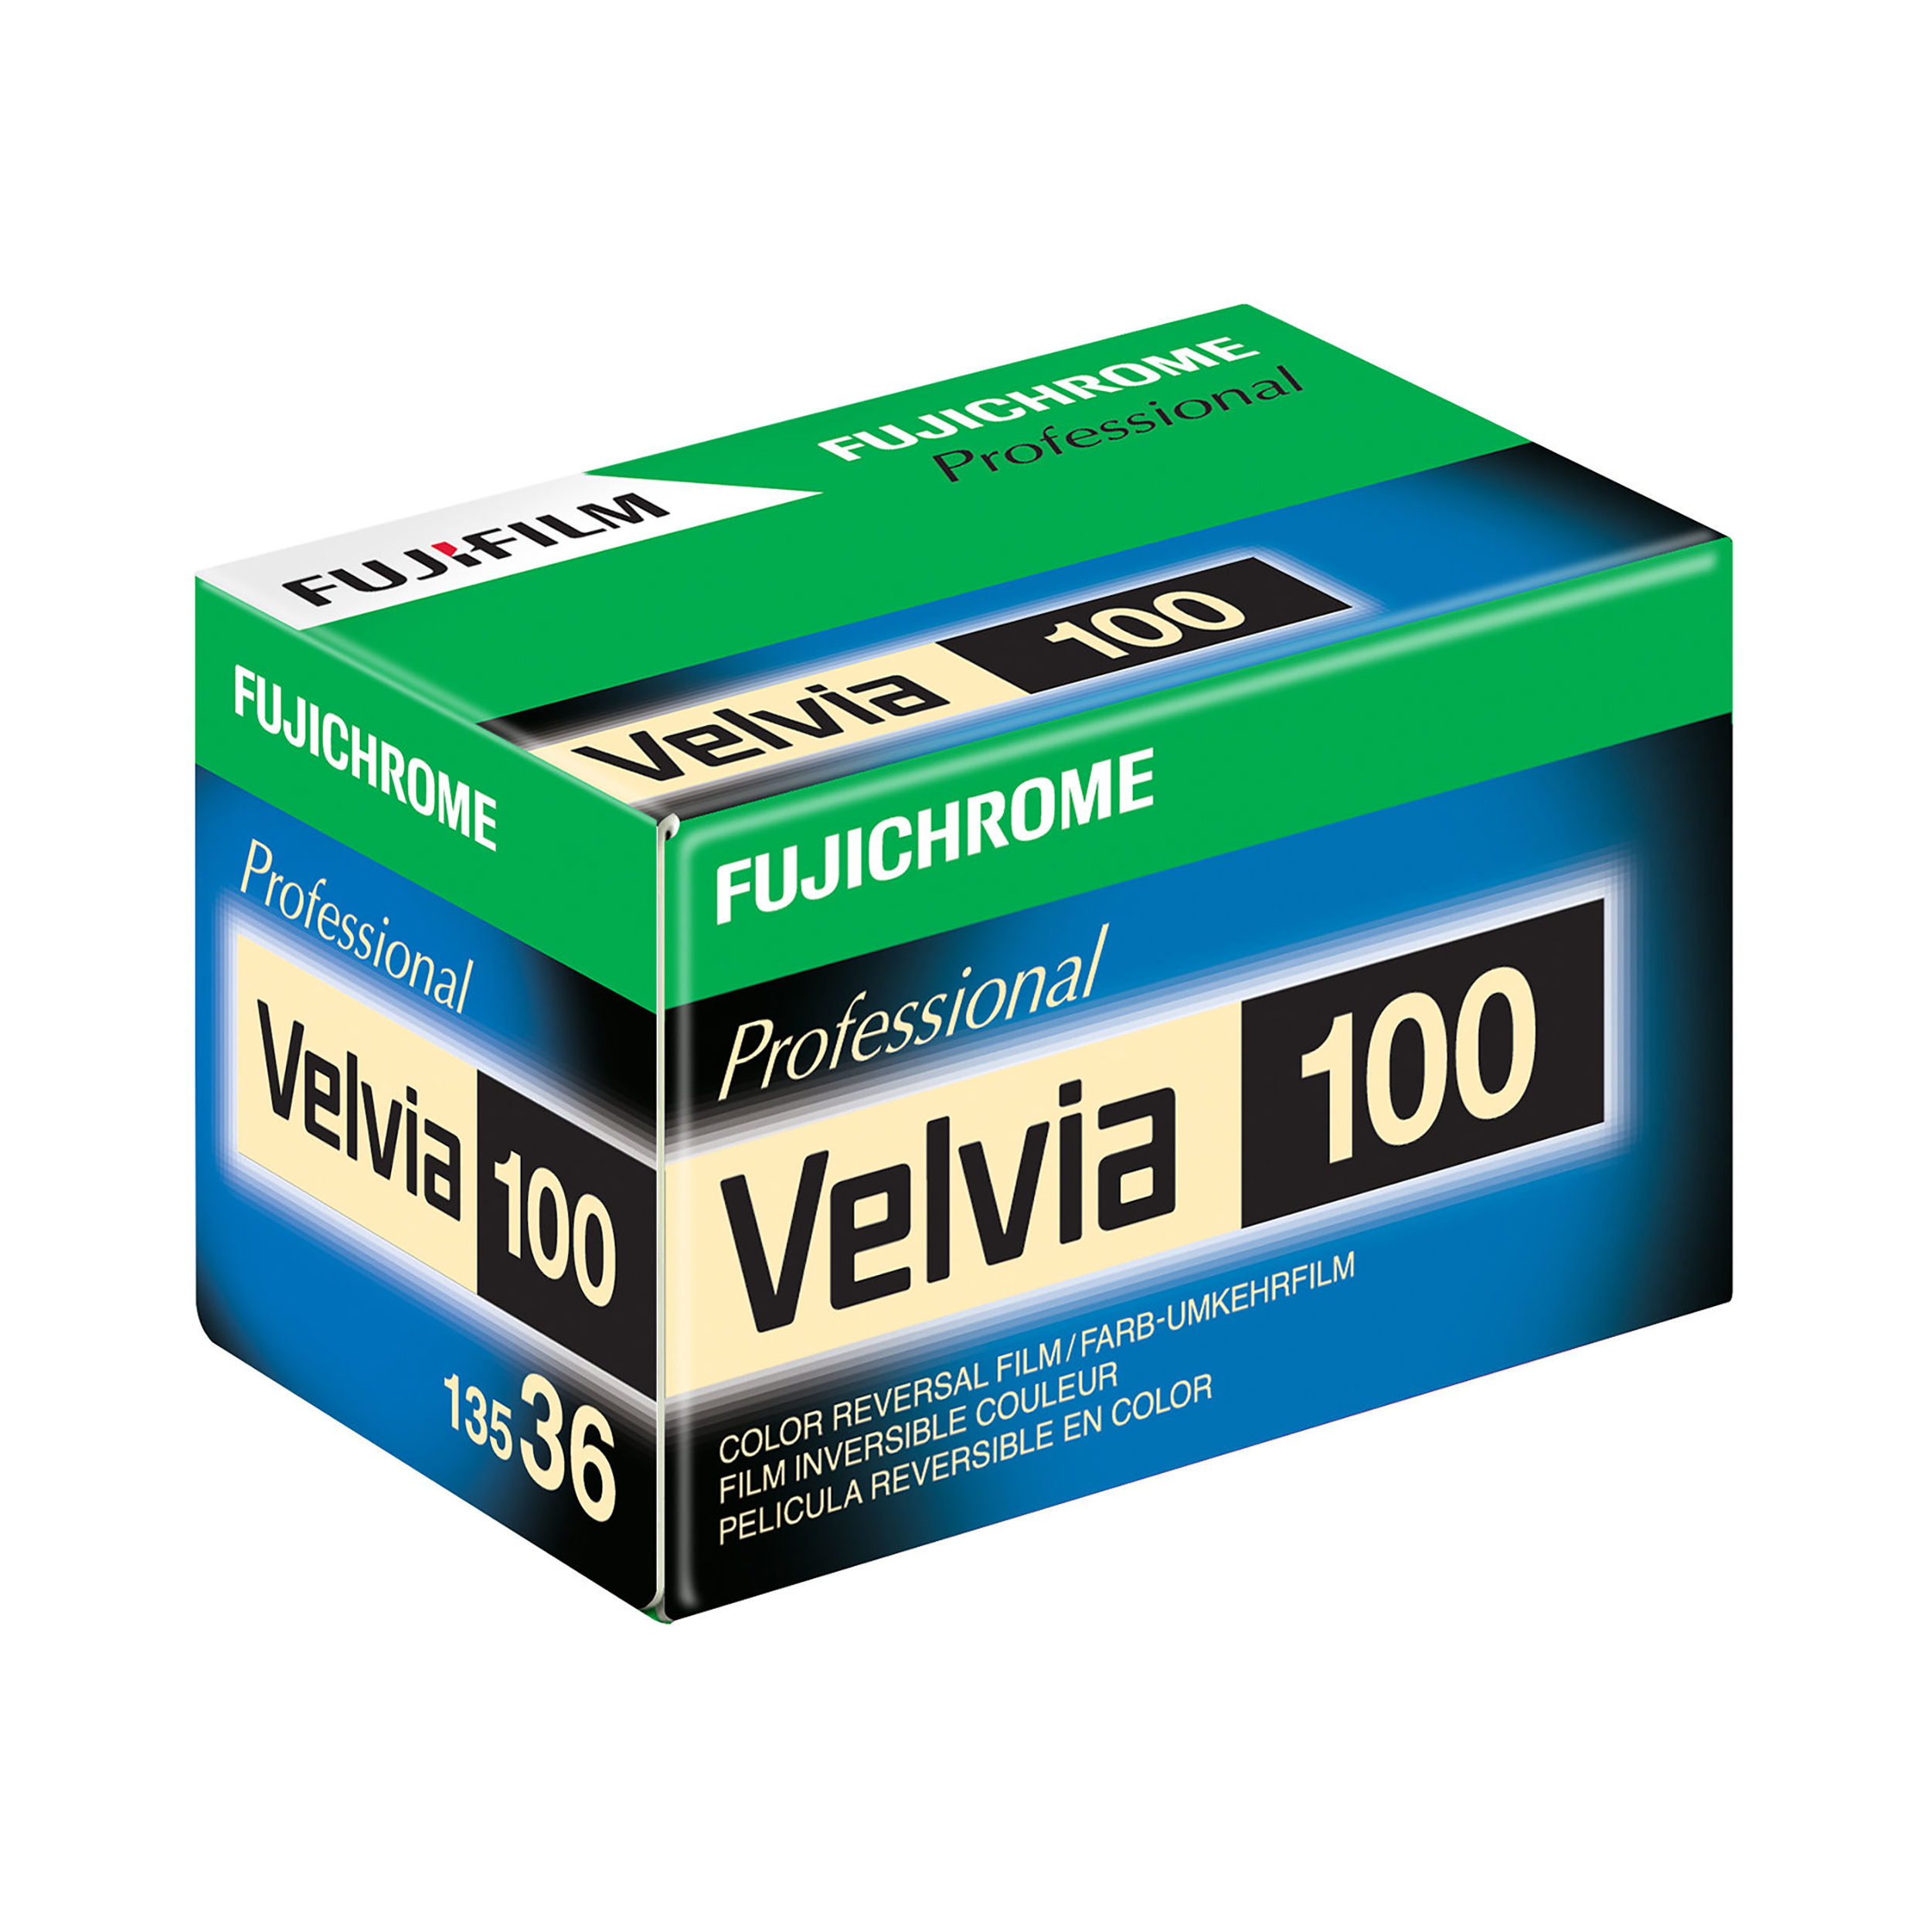 FUJIFILM Fujichrome Velvia 100 Professional RVP 100 Color Transparency Film - 35mm, 36 Exp